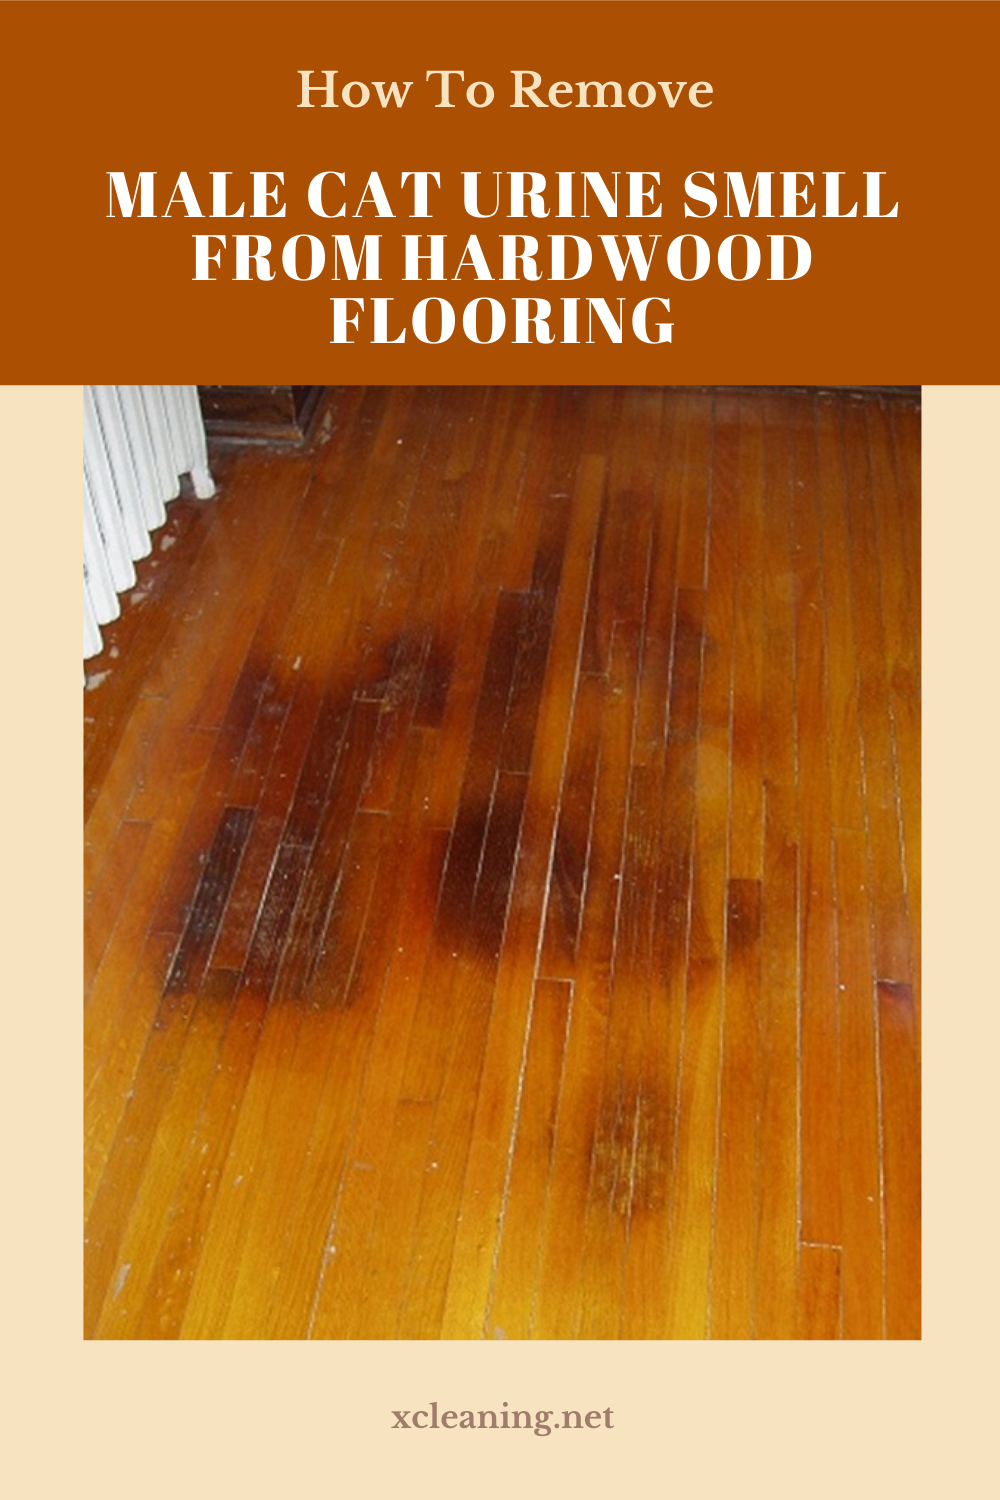 Hardwood Floors Carnawall, How To Remove Cat Urine From Hardwood Floors Ehow